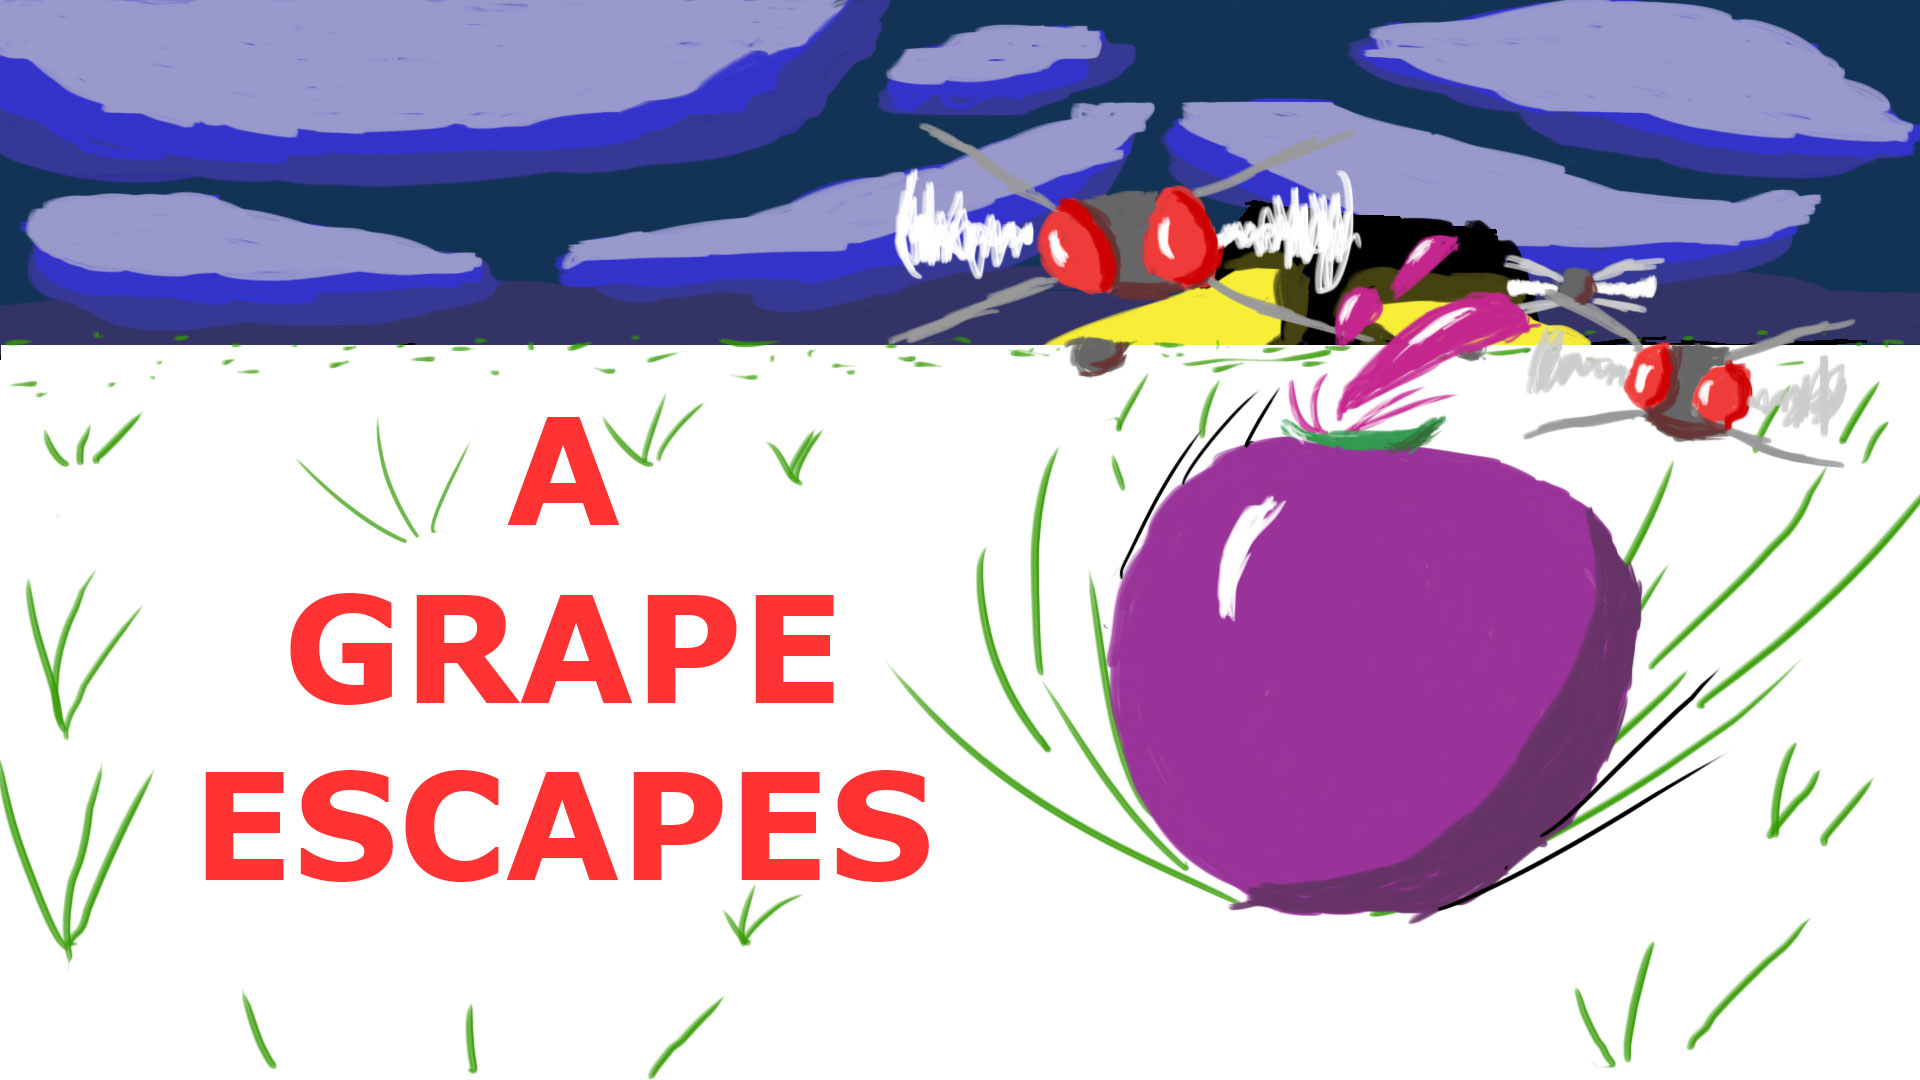 A Grape Escapes